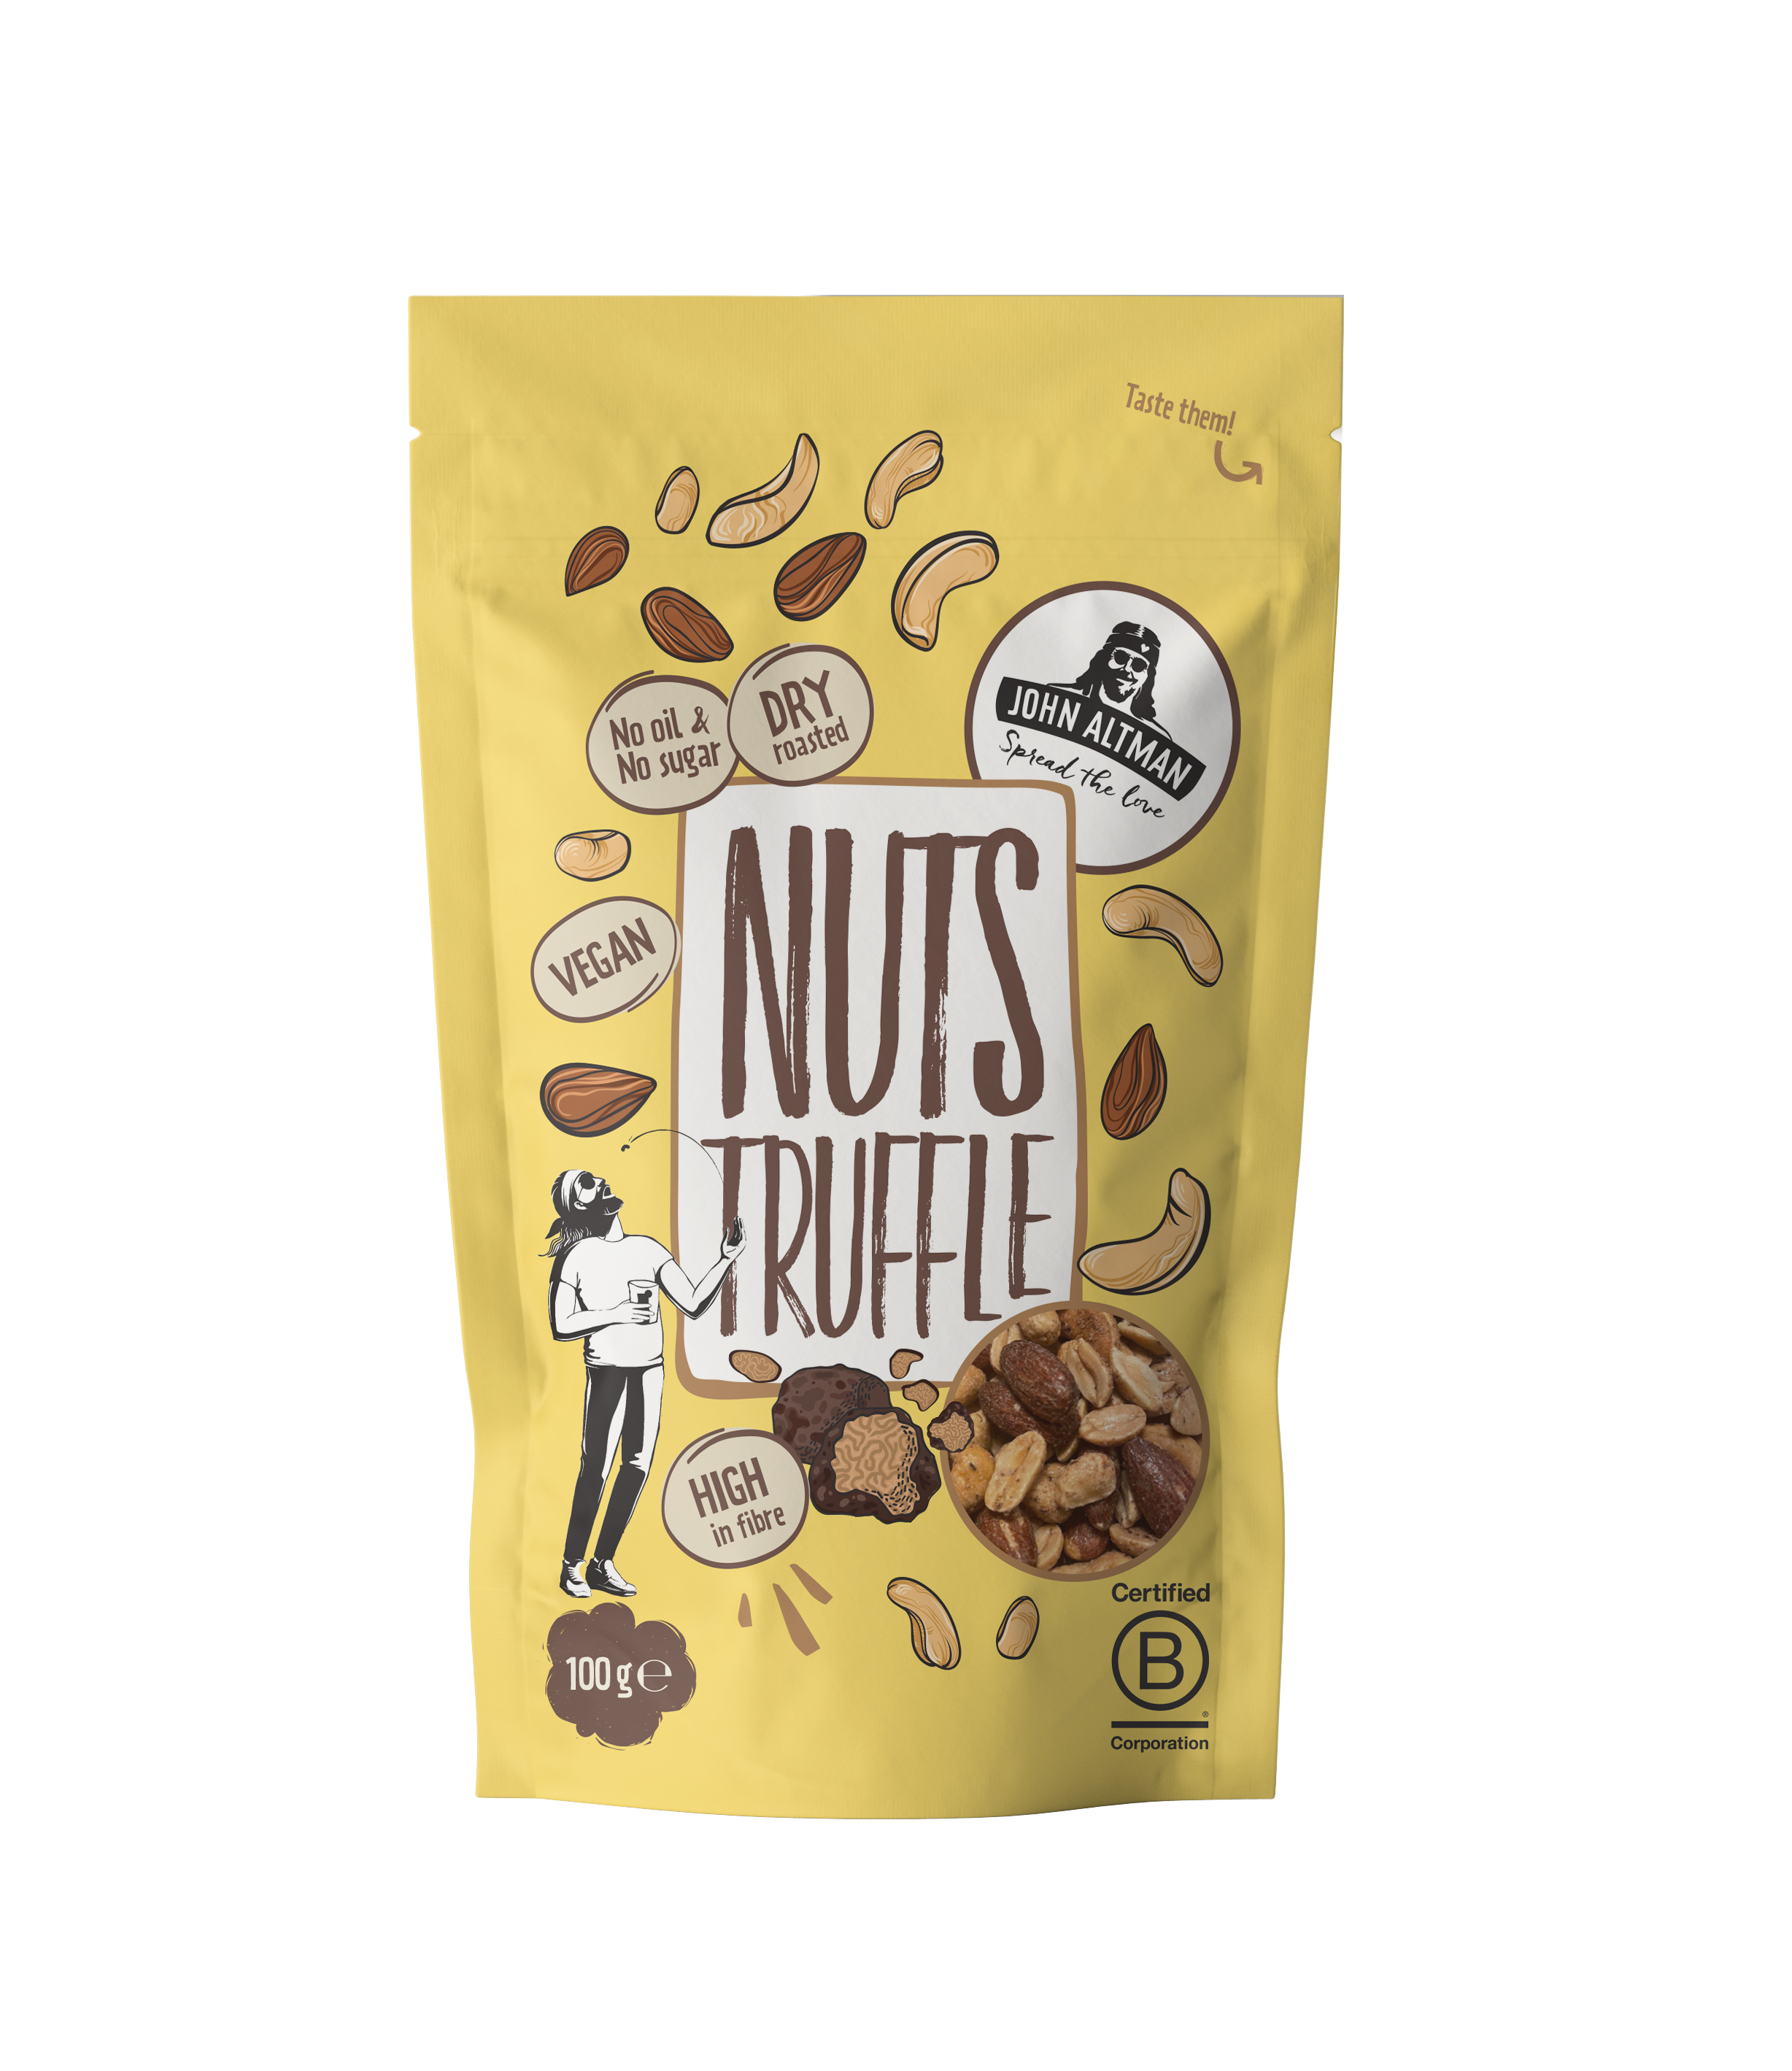 Dry roasted Nuts Truffle - John Altman